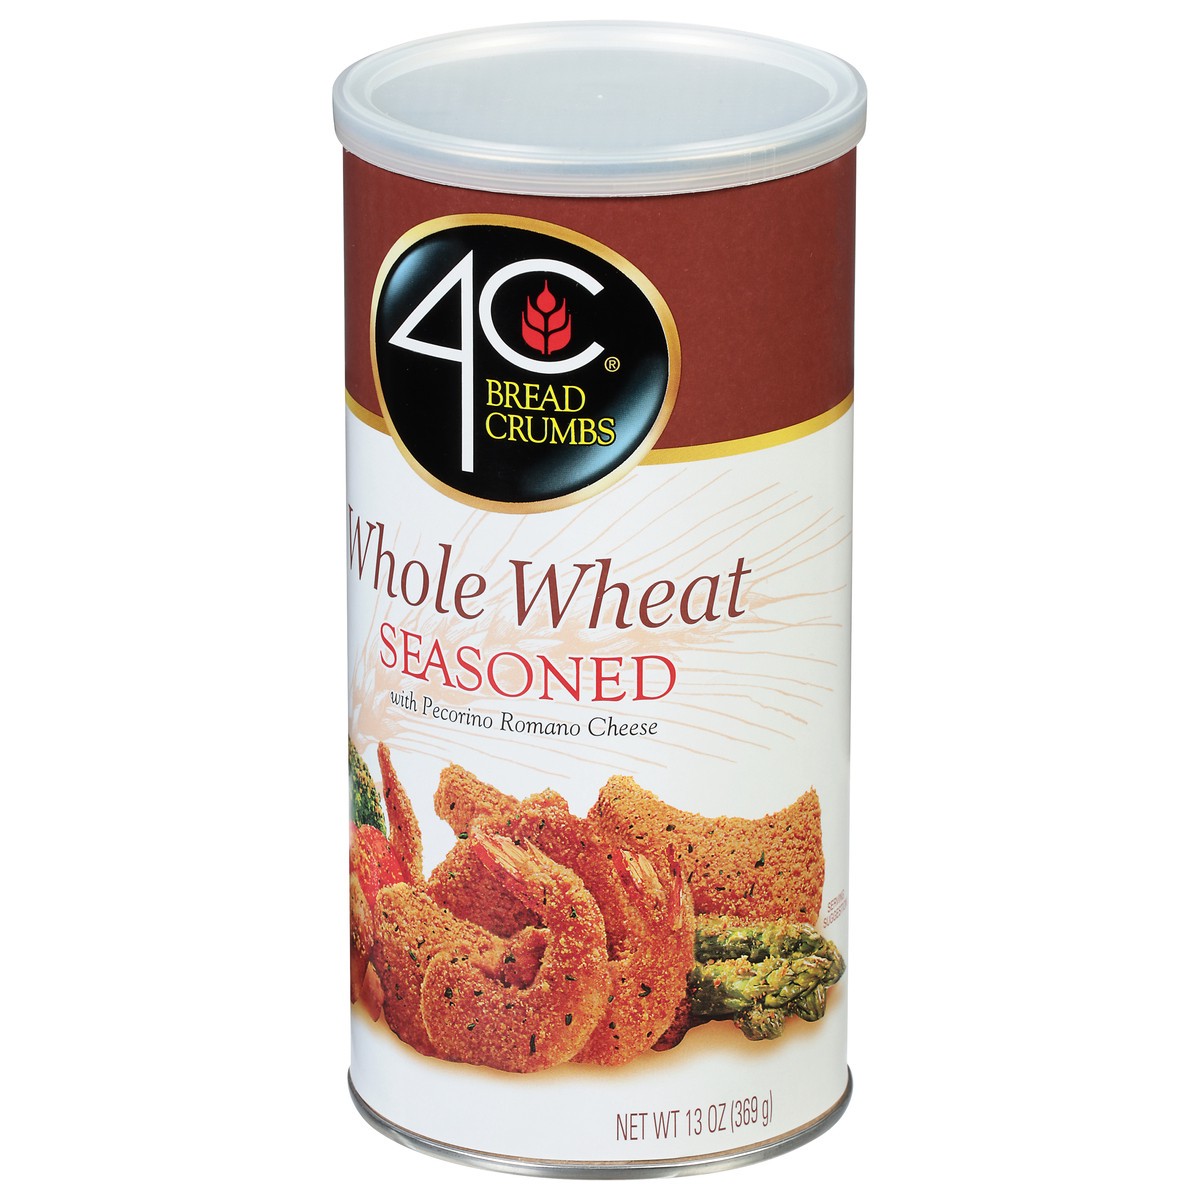 slide 4 of 9, 4C Seasoned Whole Wheat Bread Crumbs 13 oz, 13 oz